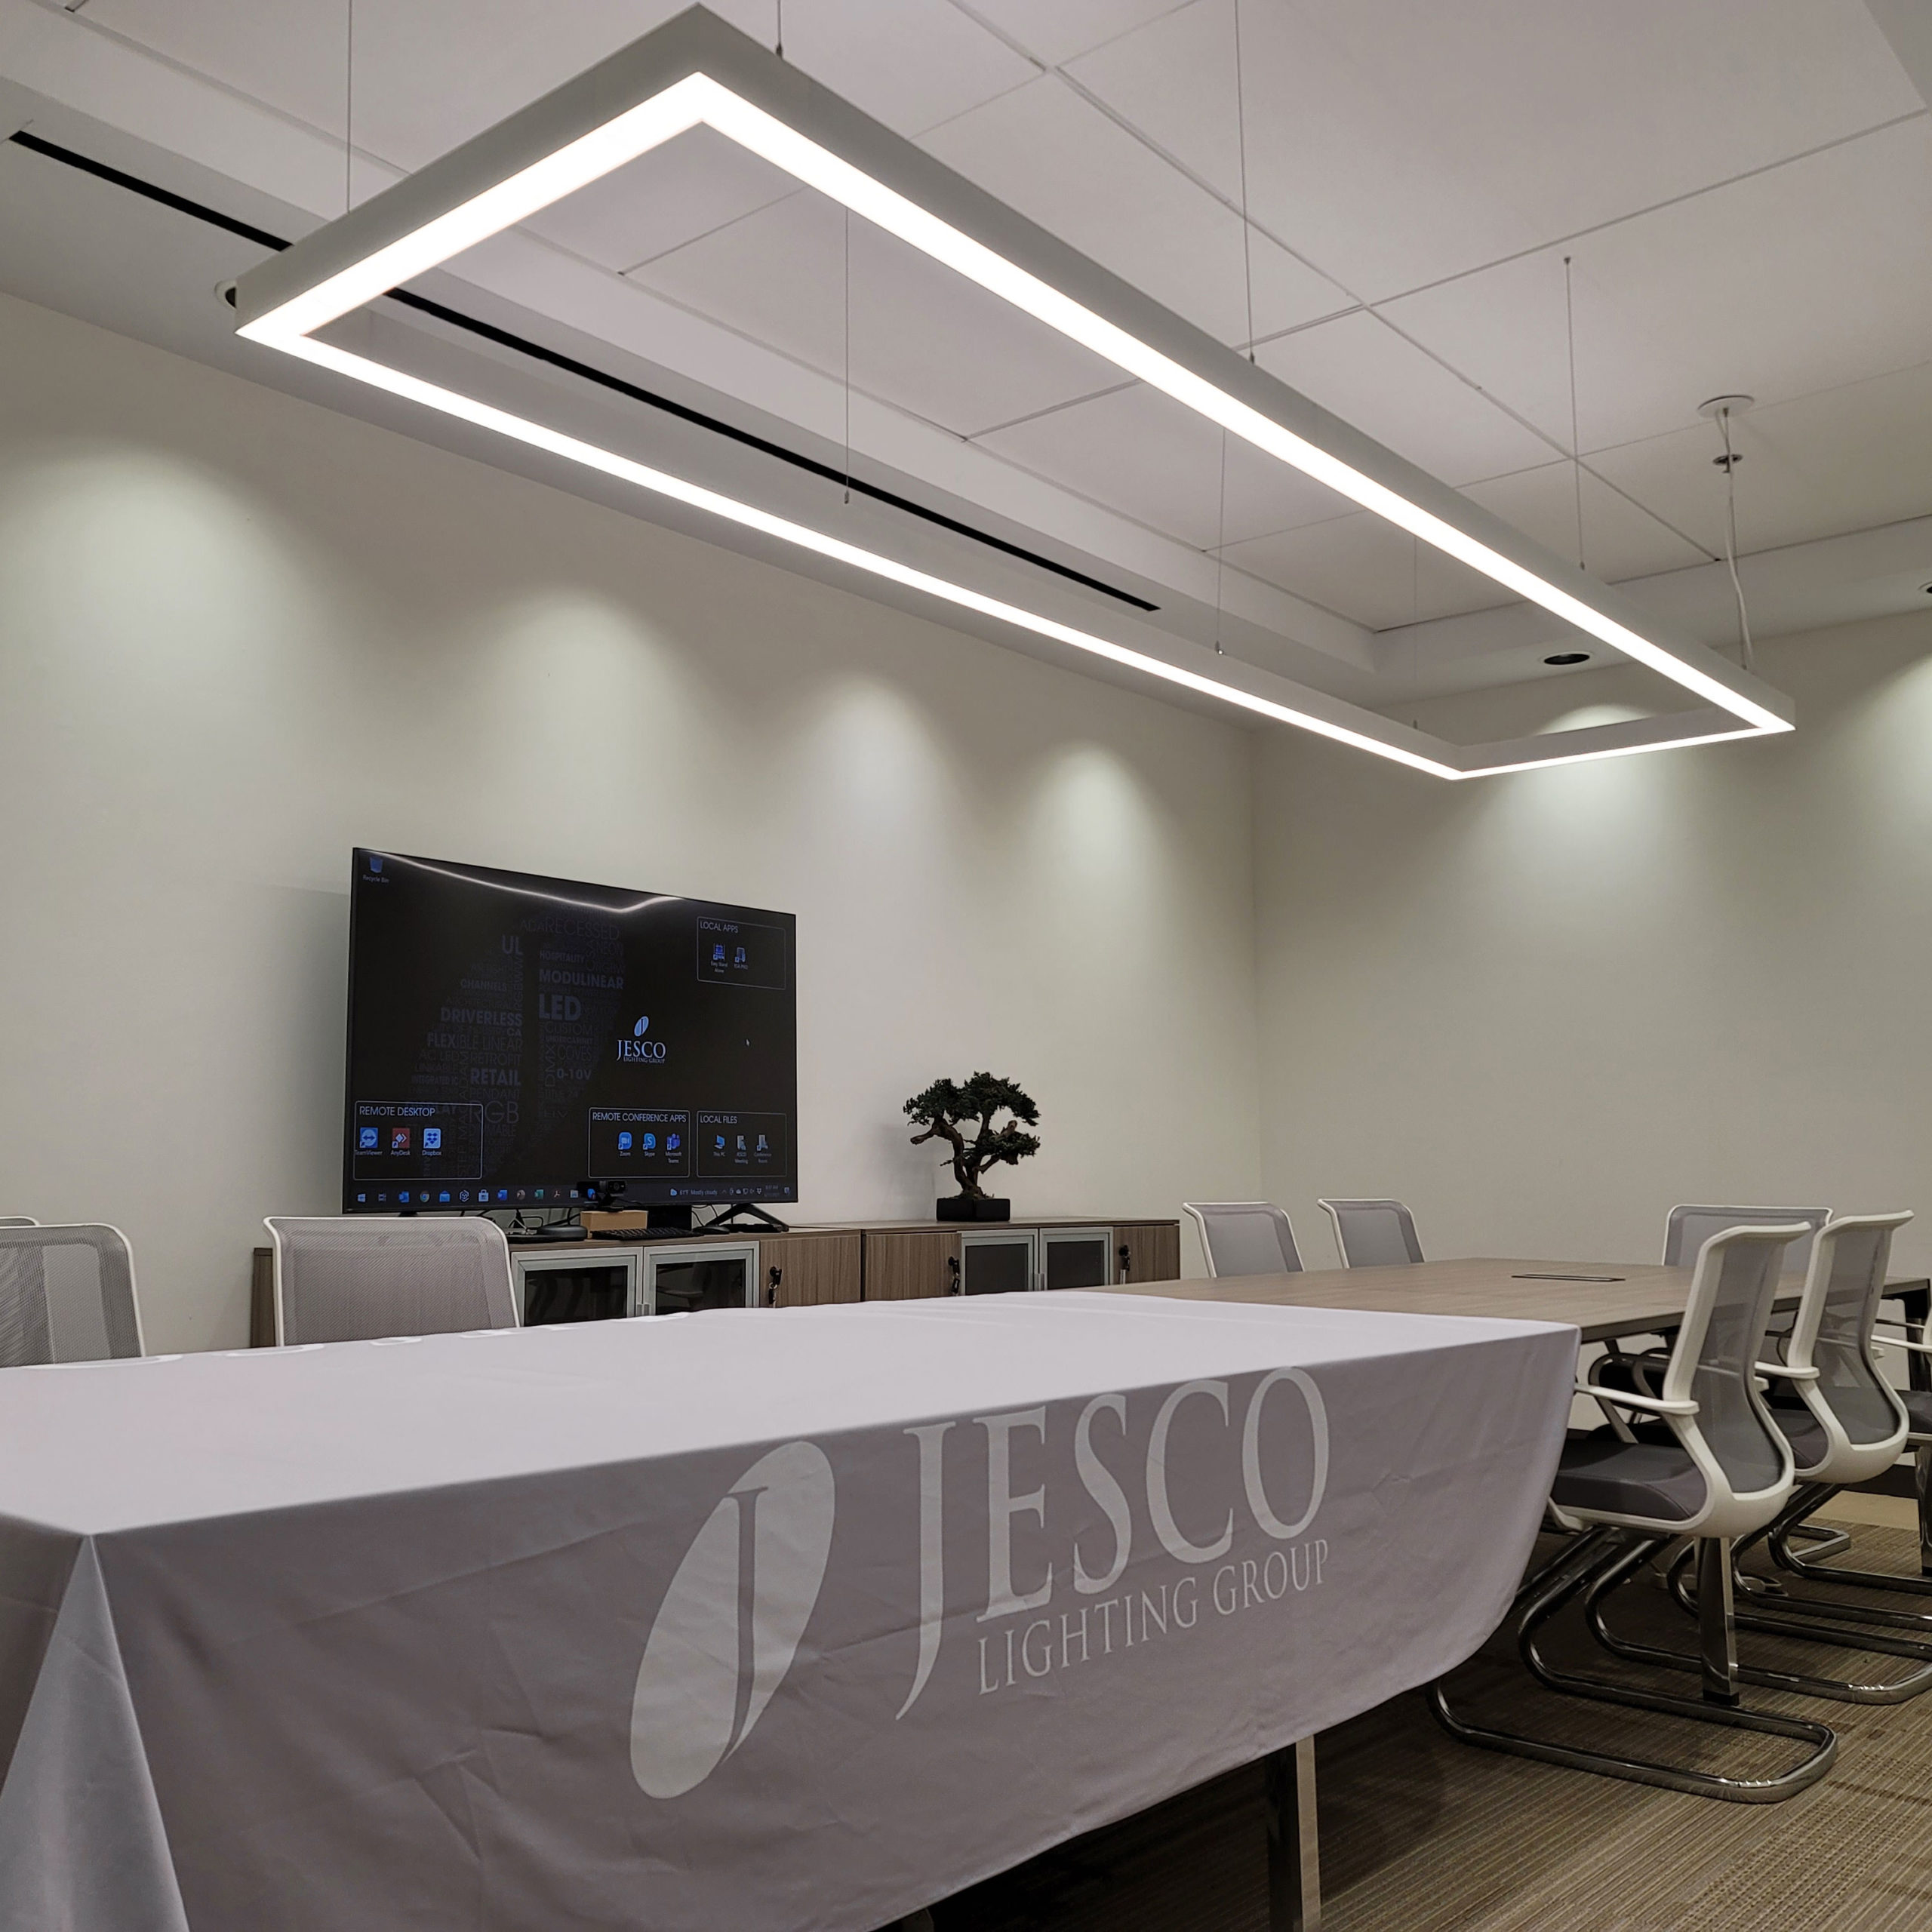 JESCO Headquarter - Conference Room